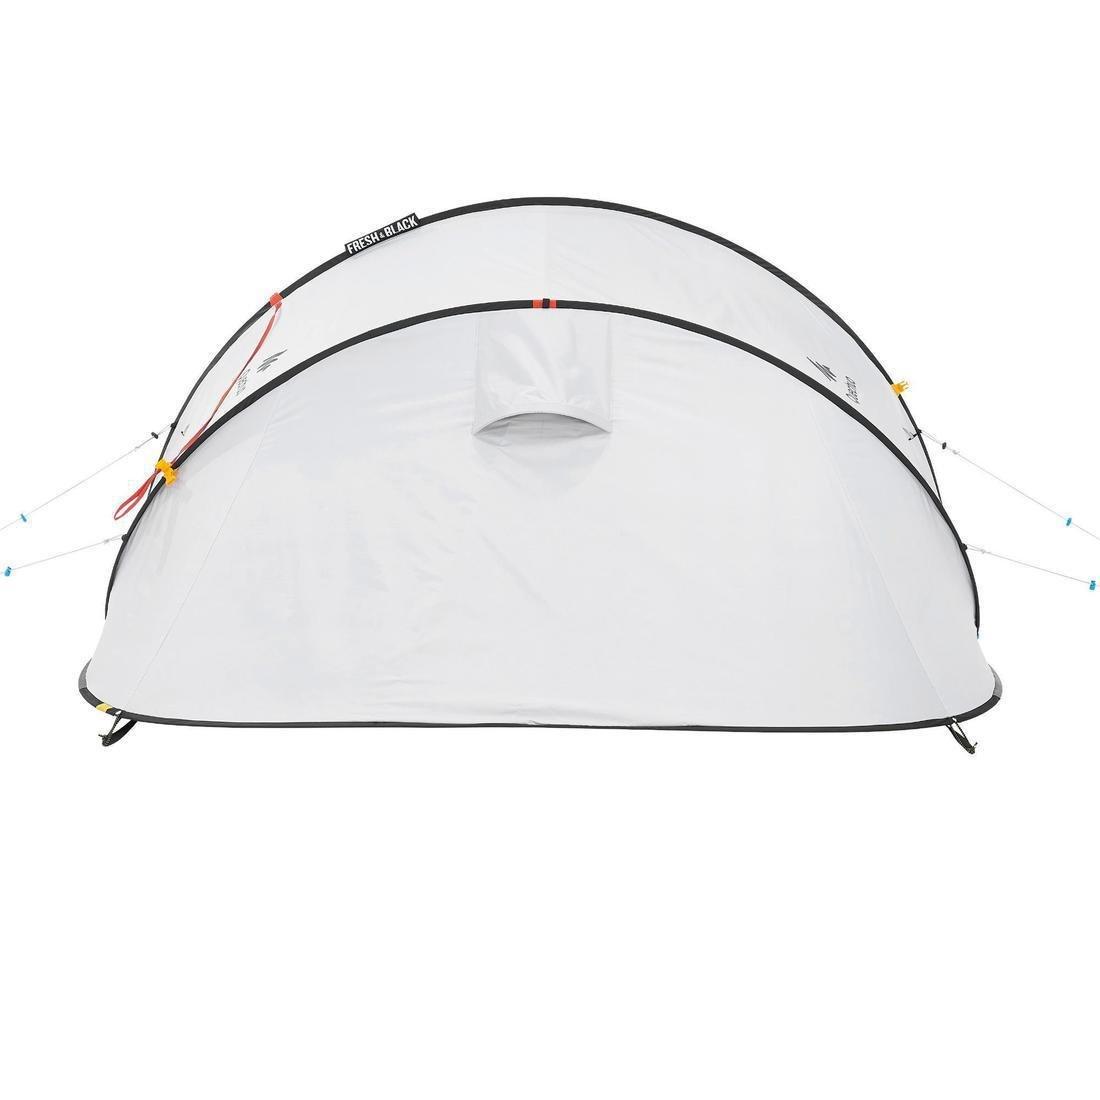 QUECHUA - Camping Tent, Fresh 2 Seconds, Black-White